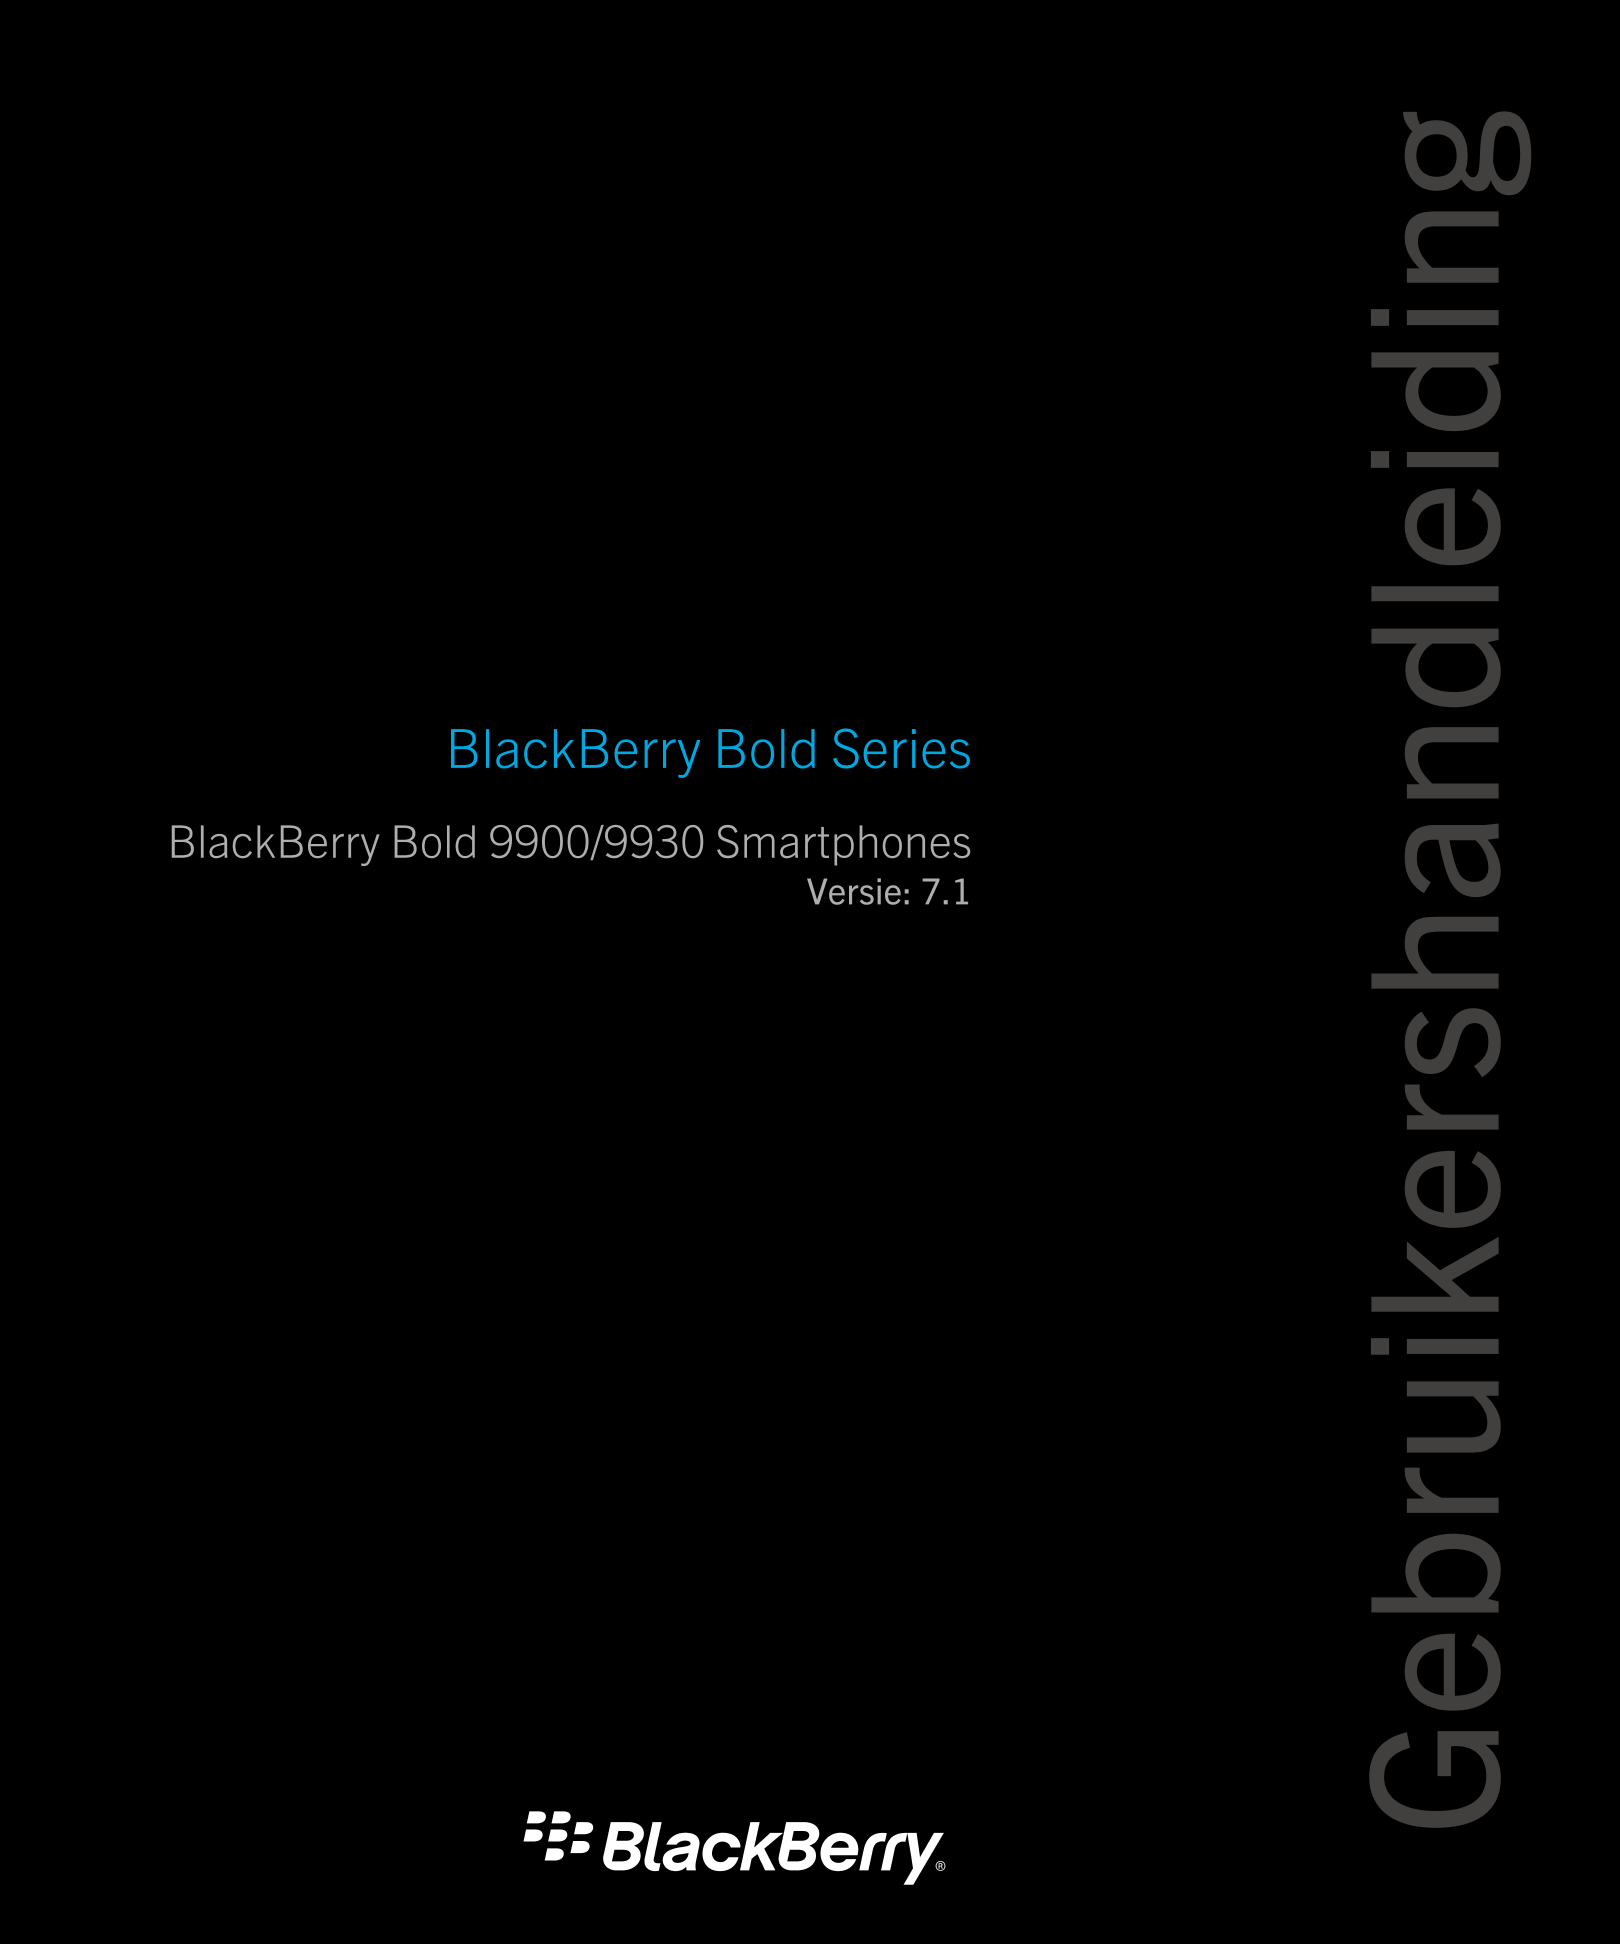 Gebruikershandleiding
BlackBerry Bold Series
BlackBerry Bold 9900/9930 Smartphones
Versie: 7.1